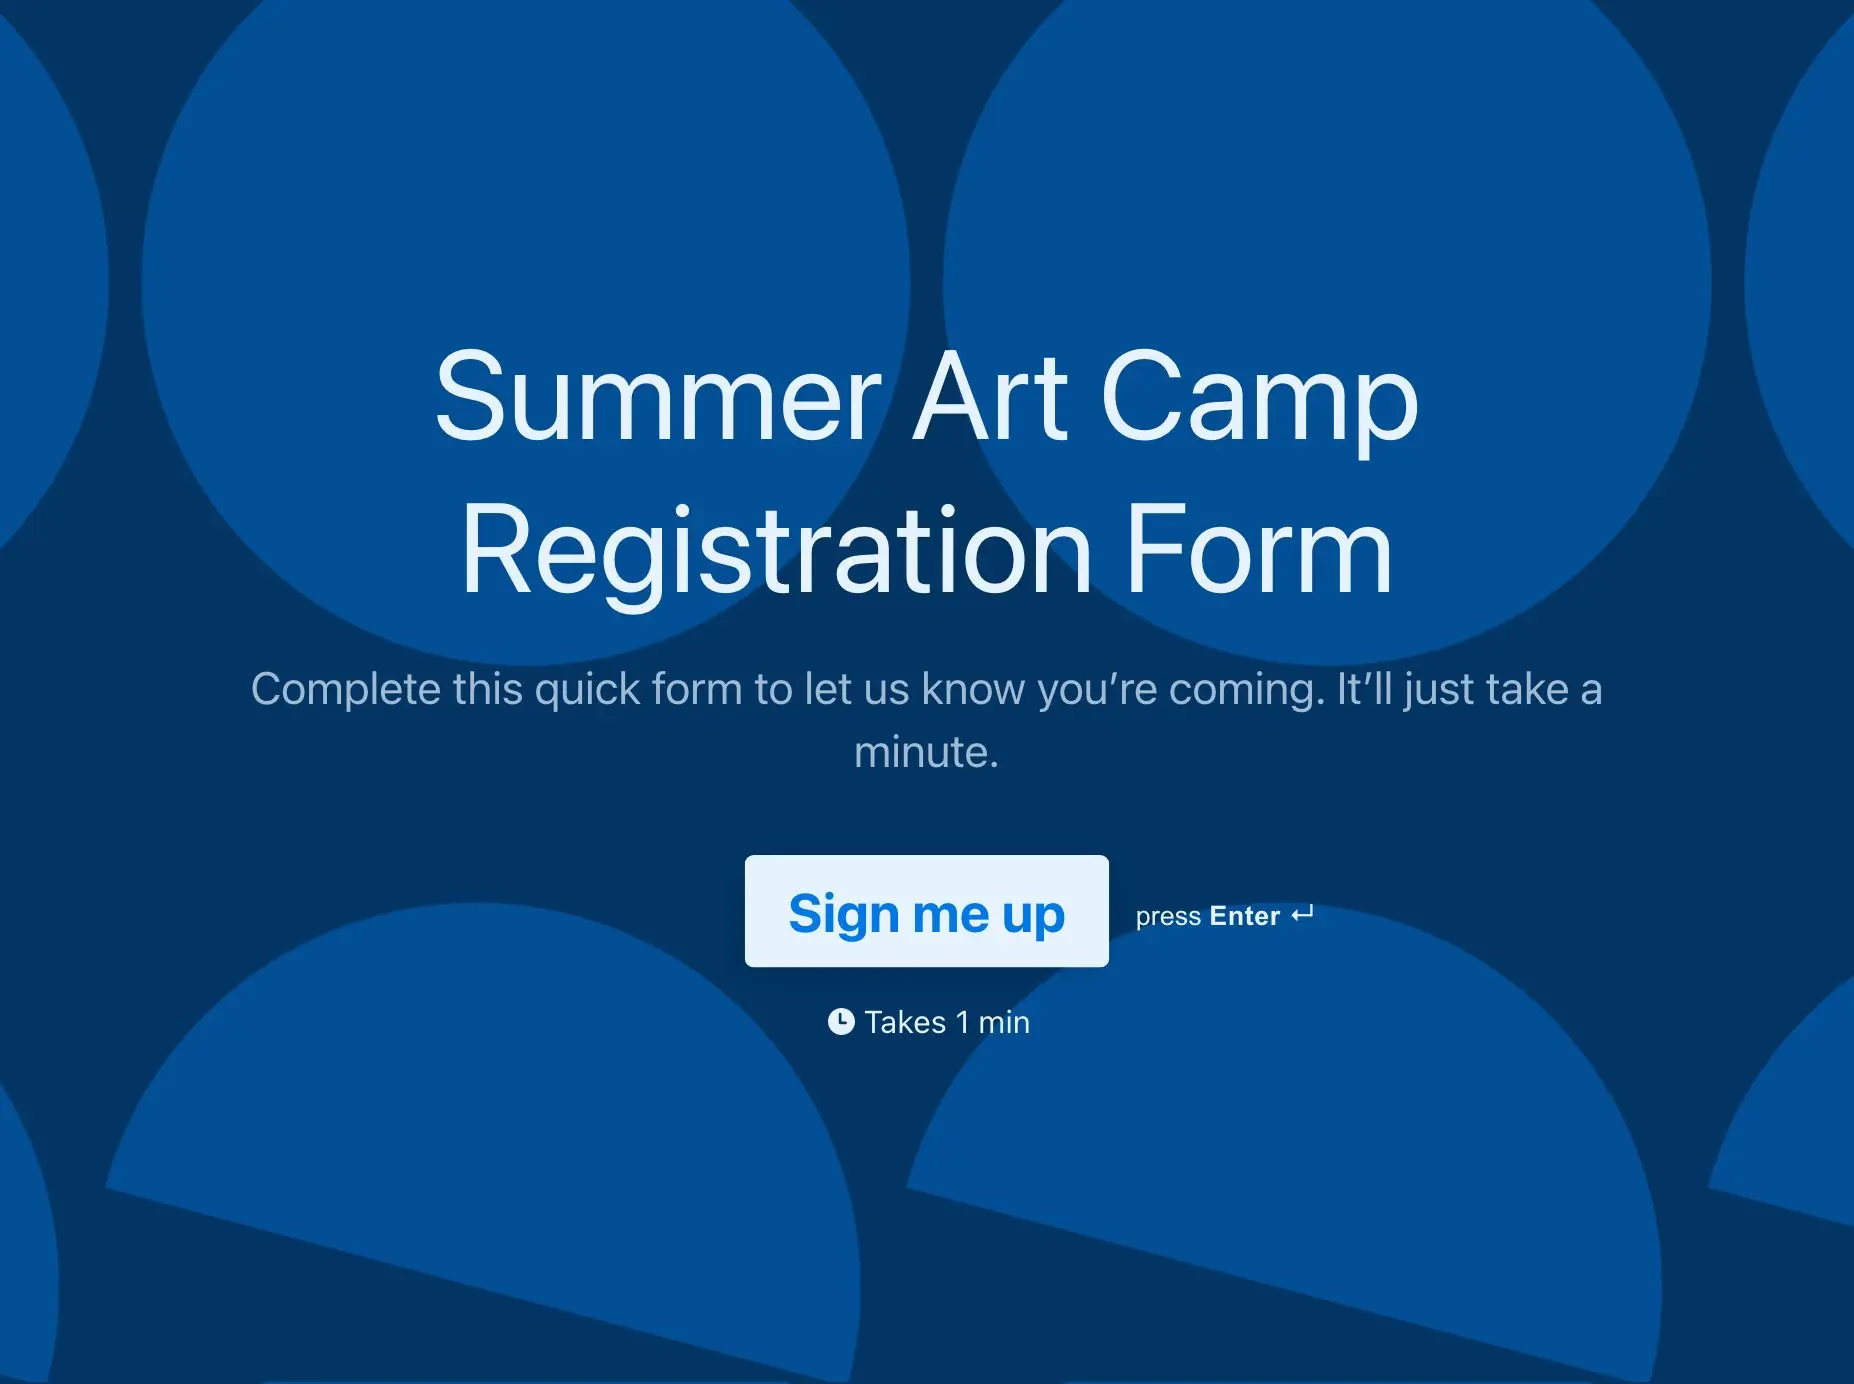 Summer Art Camp Registration Form Template Hero